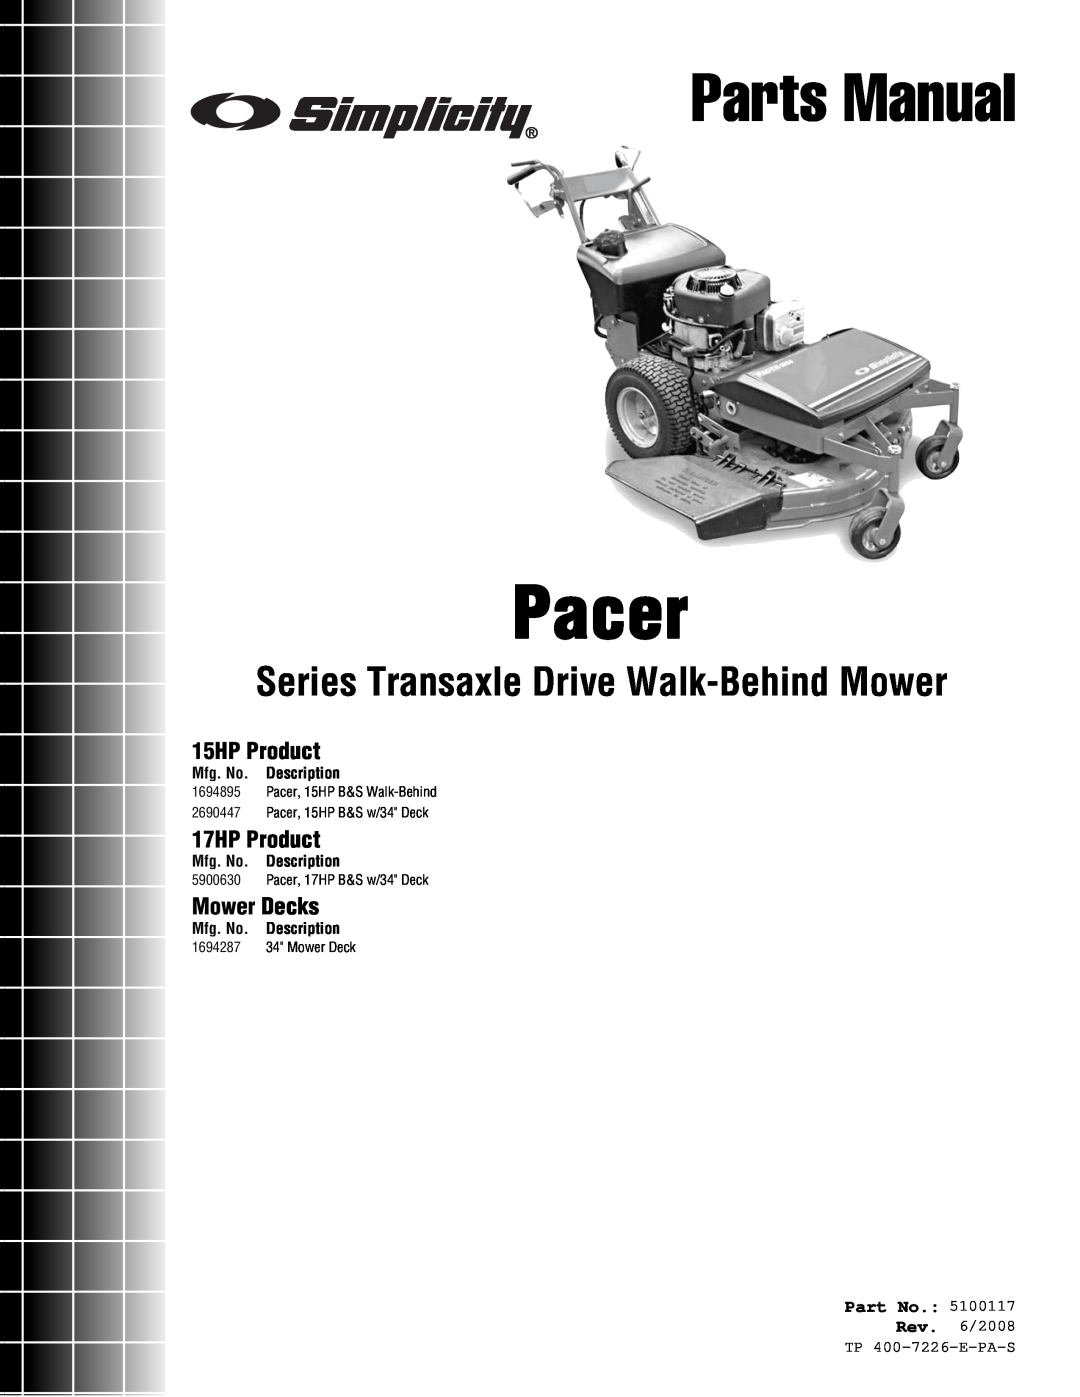 Simplicity Pacer manual 15HP Product, 17HP Product, Mower Decks, Mfg. No. Description, Parts Manual, Rev. 6/2008 